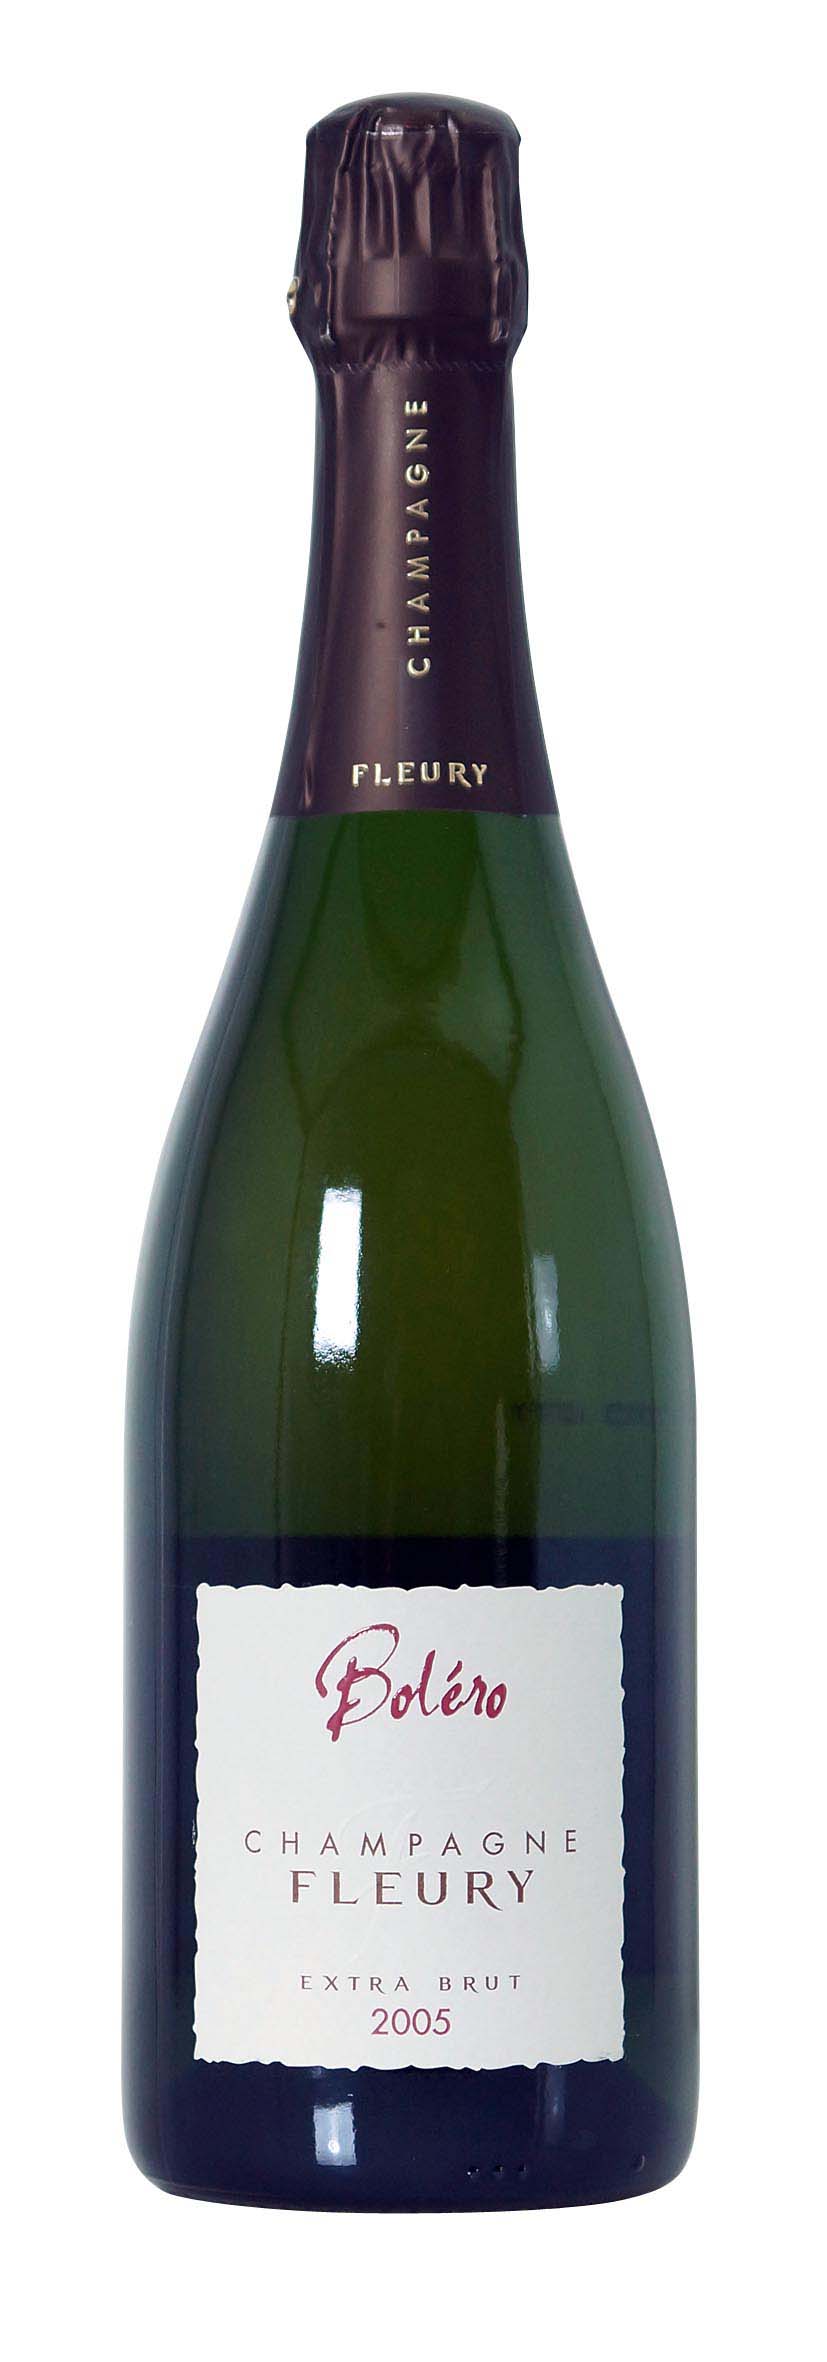 Champagne AOC Boléro Extra Brut 2005